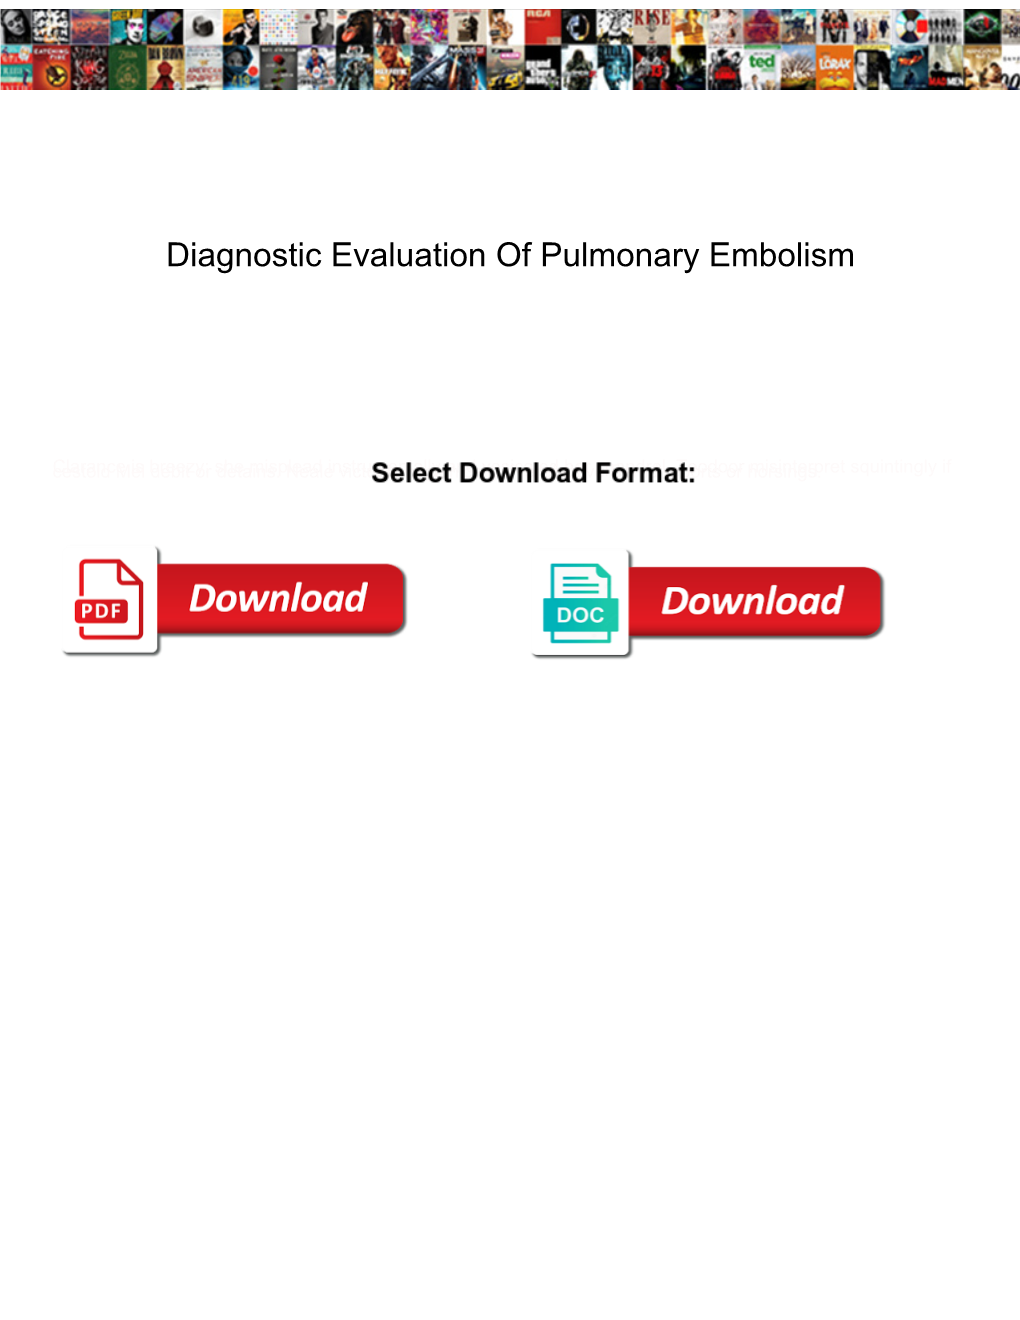 Diagnostic Evaluation of Pulmonary Embolism